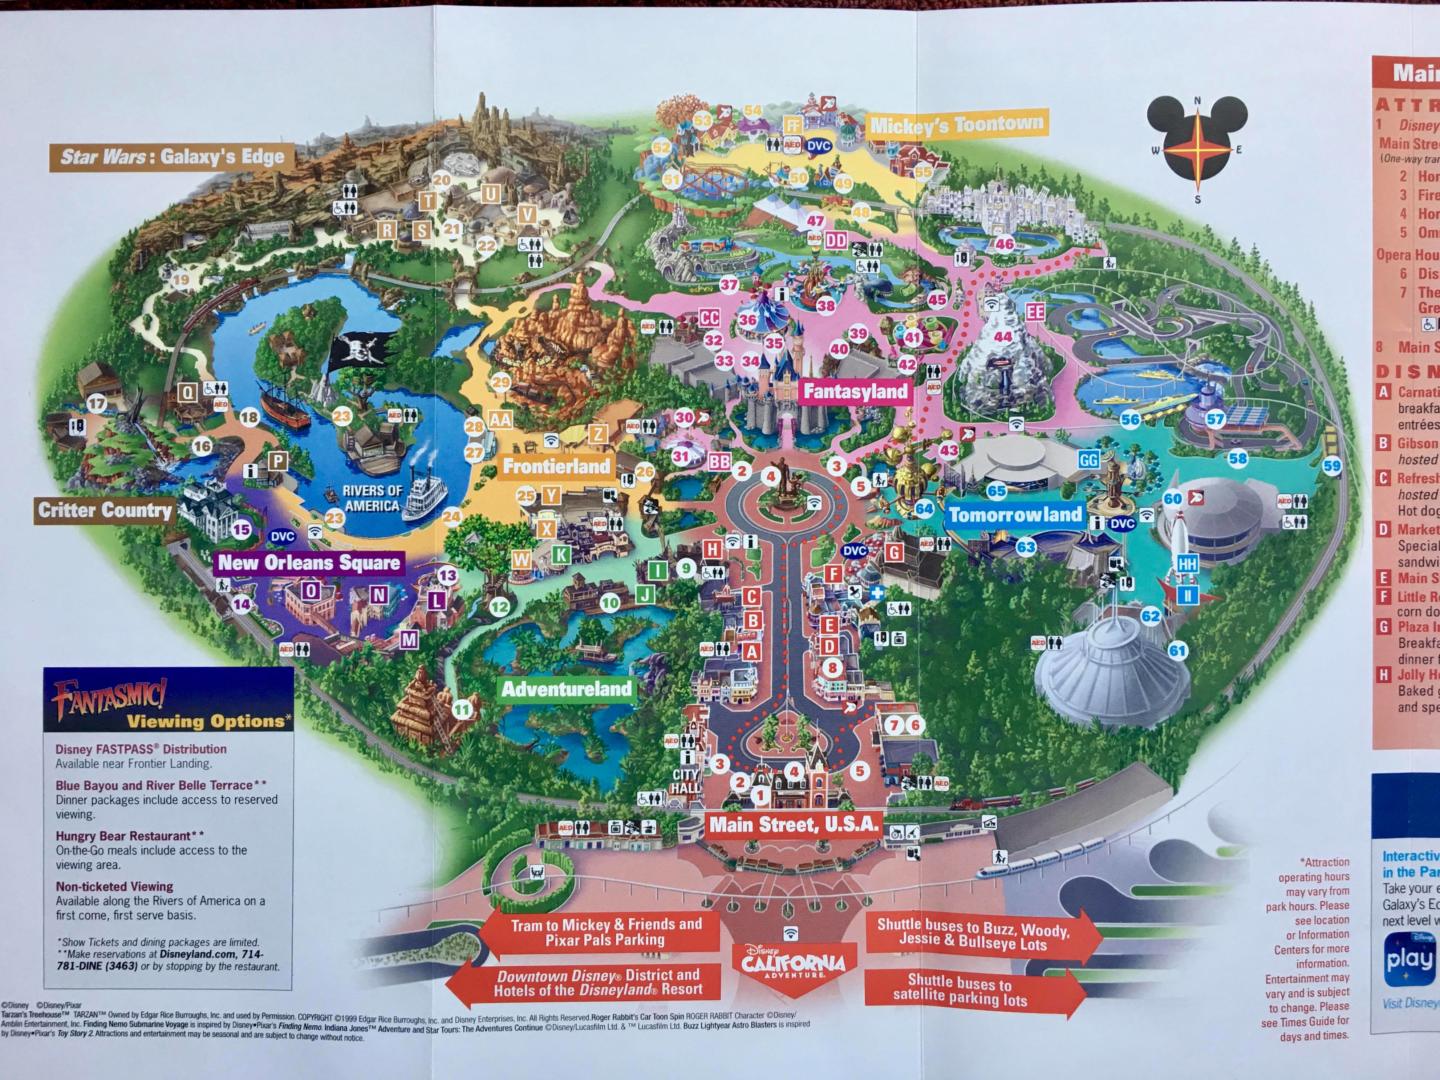 disneyland theme park map Micechat Disneyland Resort Features Star Wars Galaxy S Edge disneyland theme park map